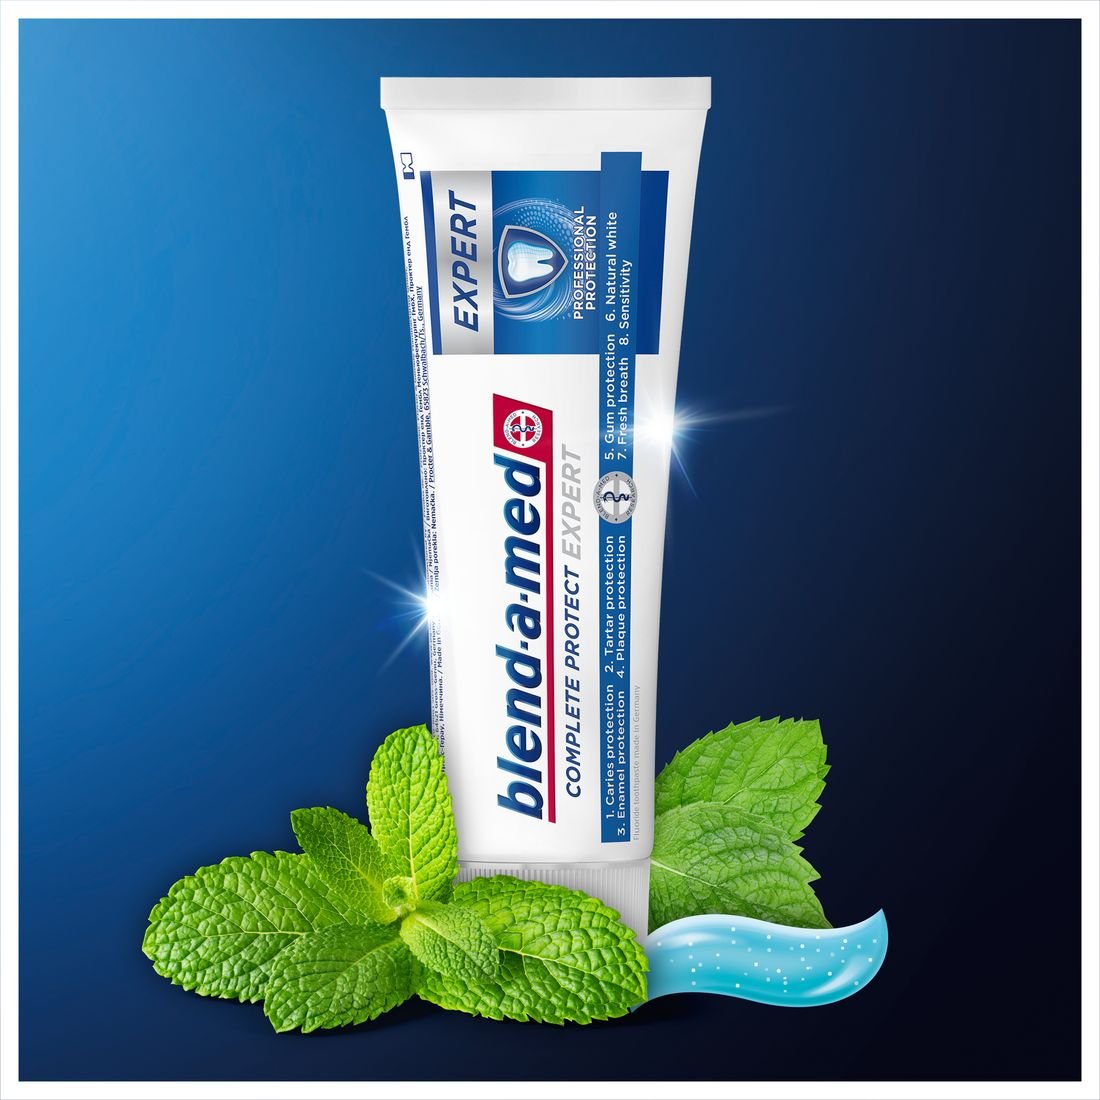 Зубная паста Blend-a-med Complete Protect Expert Профессиональная защита 75 мл - фото 4